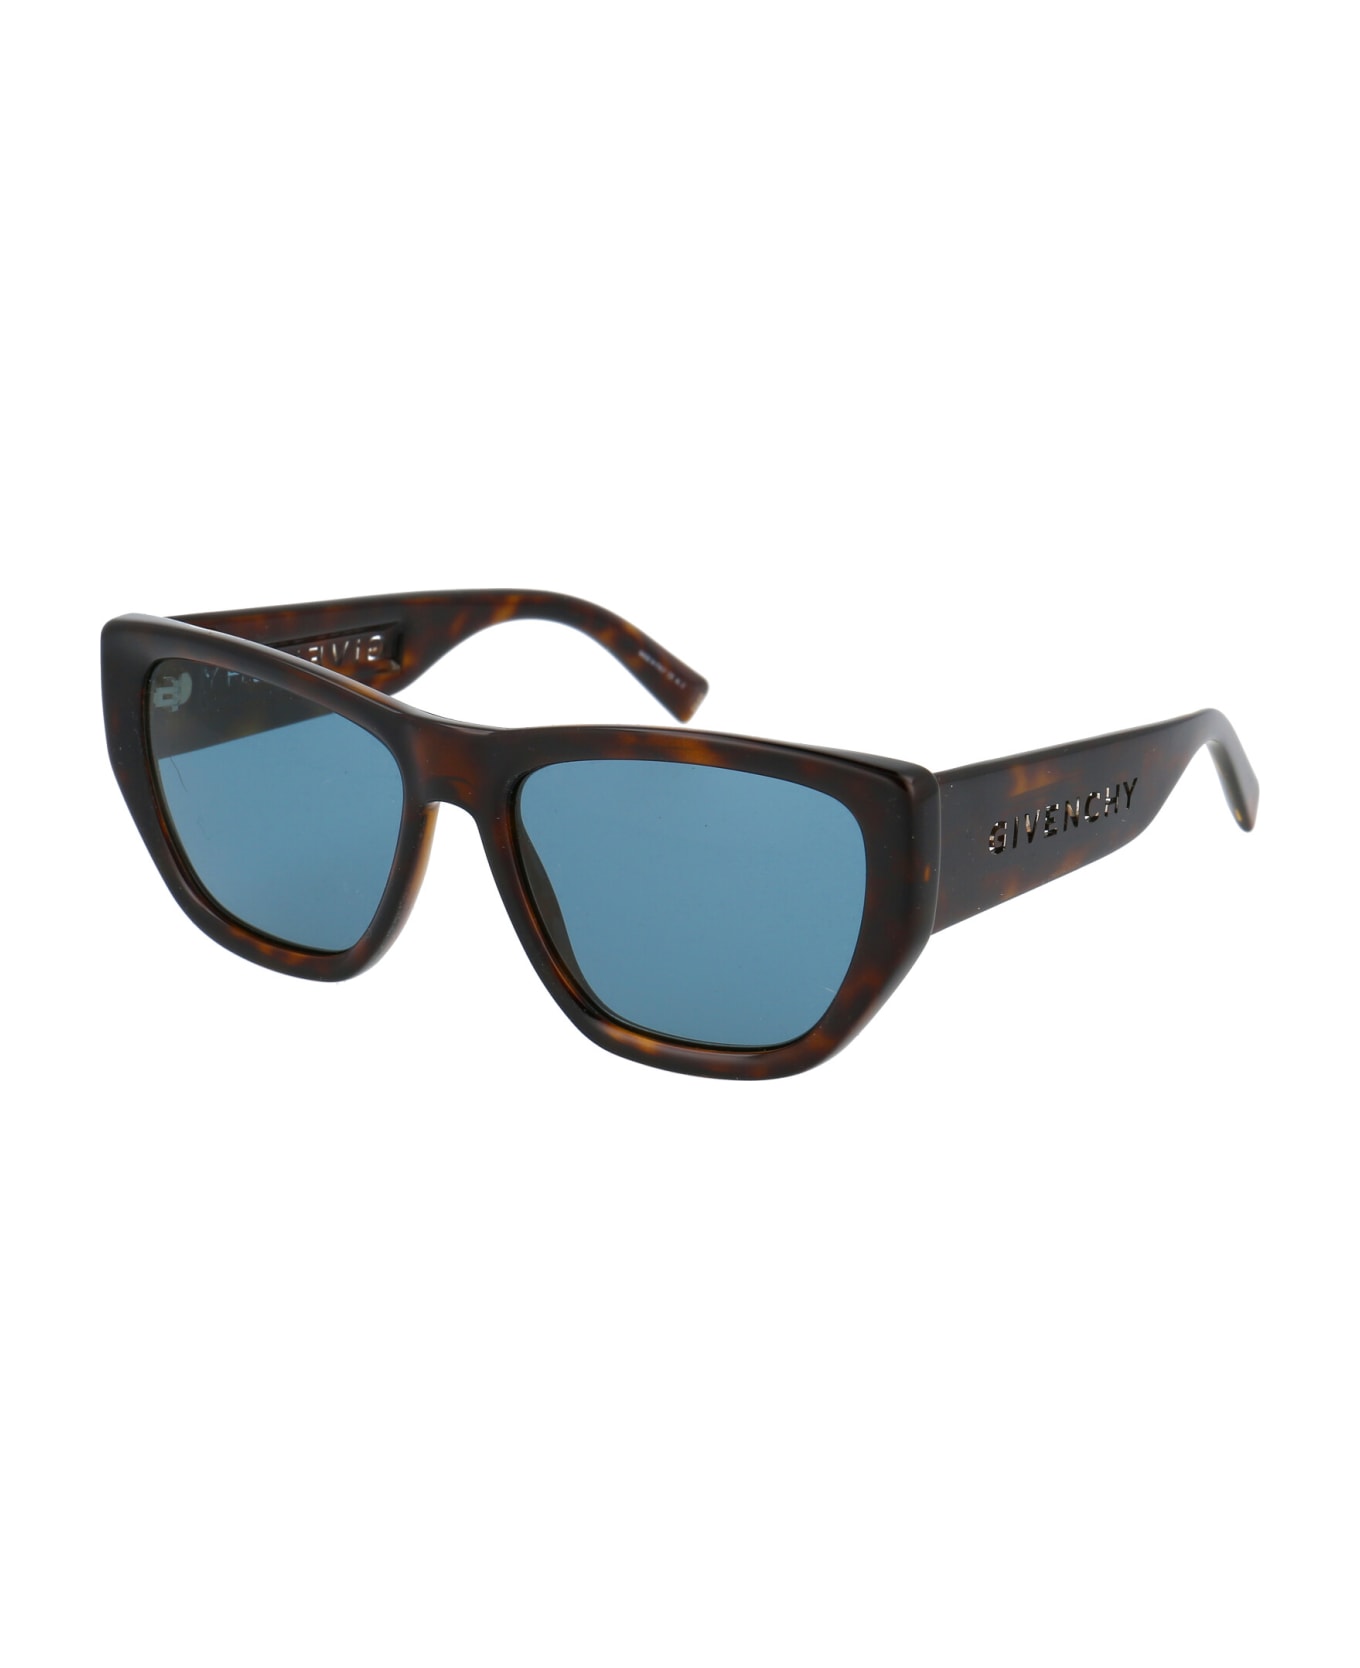 Givenchy Eyewear Gv 7202/s Sunglasses - 086KU HAVANA